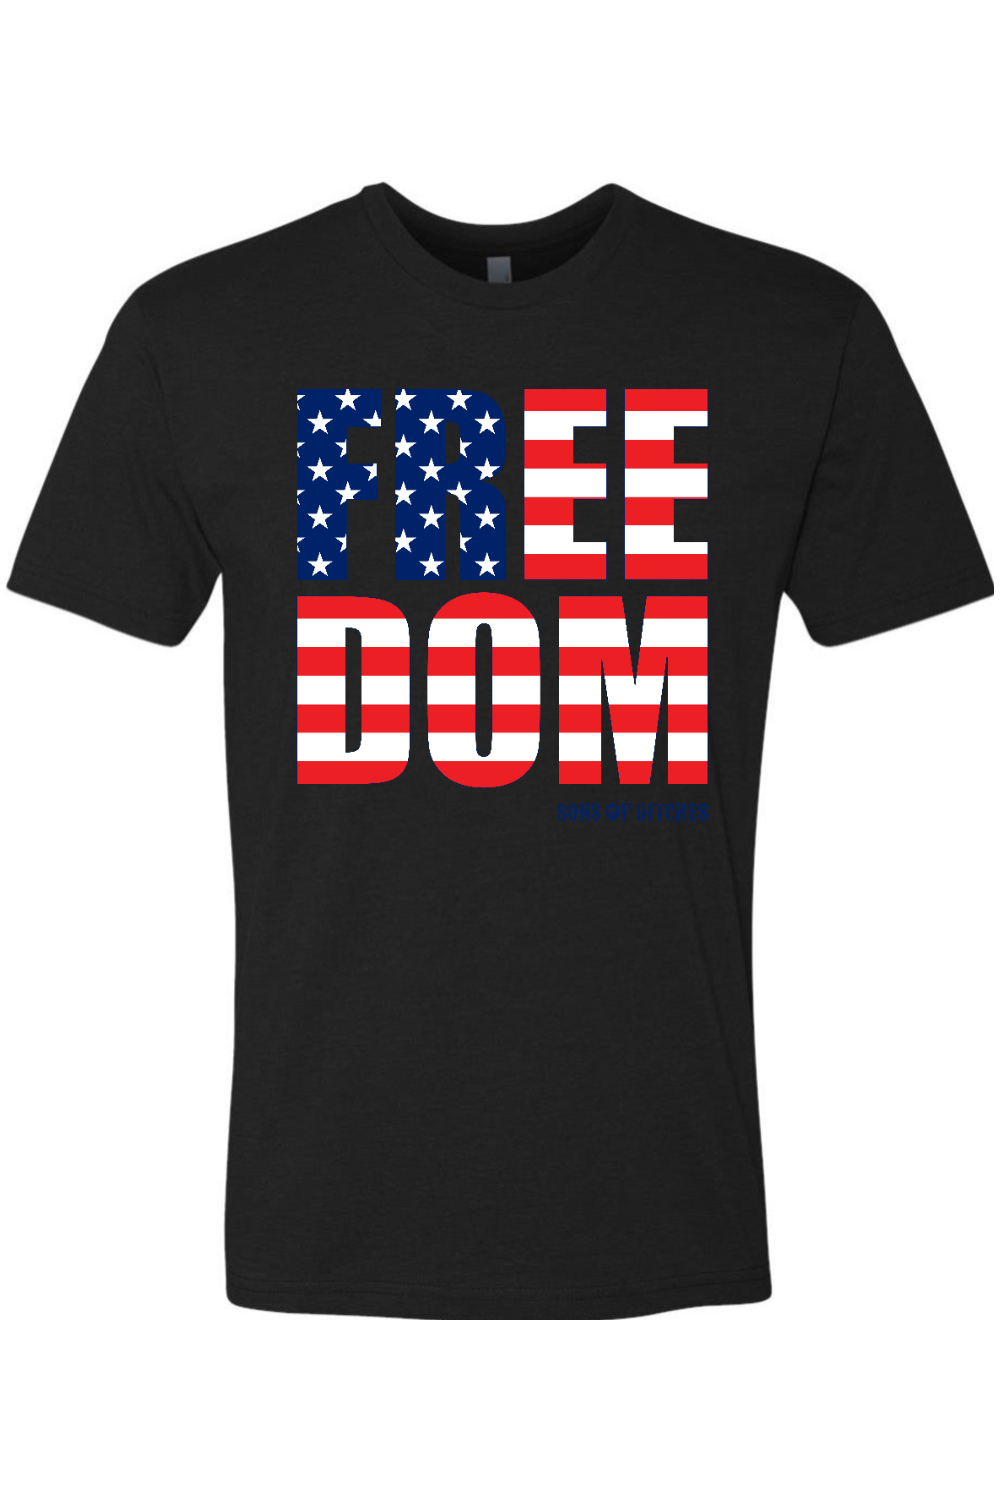 New FREEDOM T-shirt